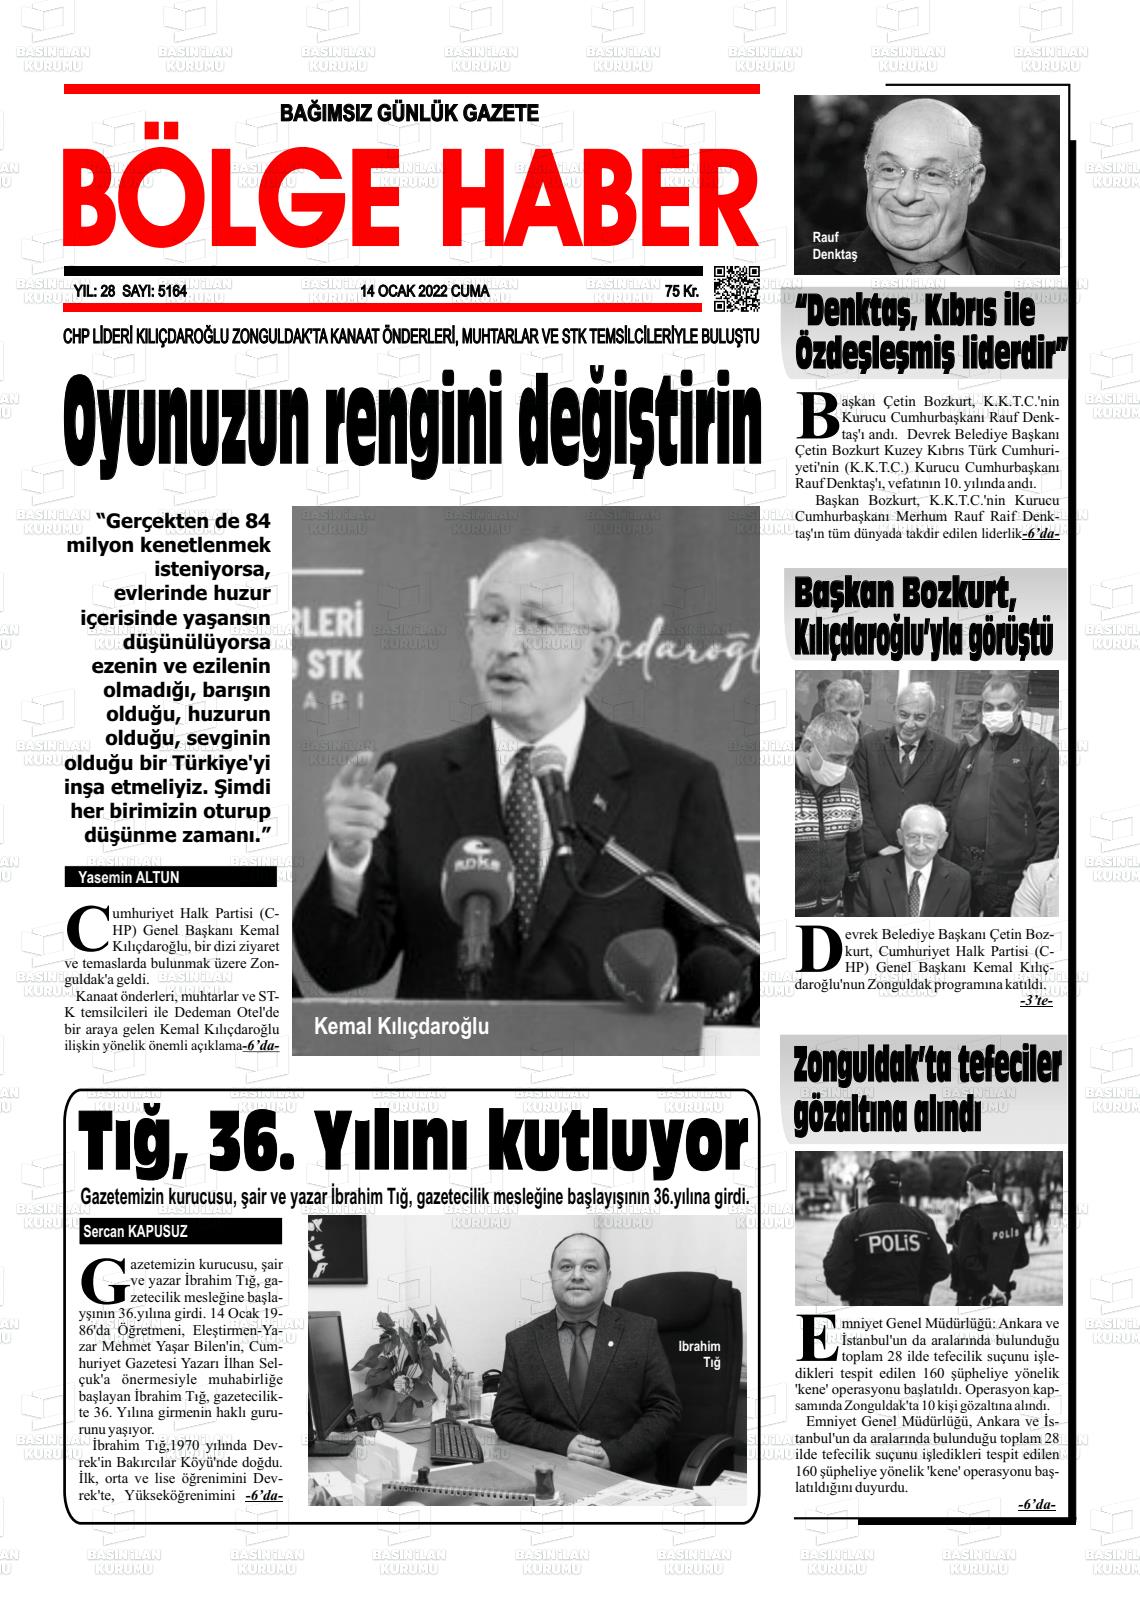 14 Ocak 2022 Devrek Bölge Haber Gazete Manşeti